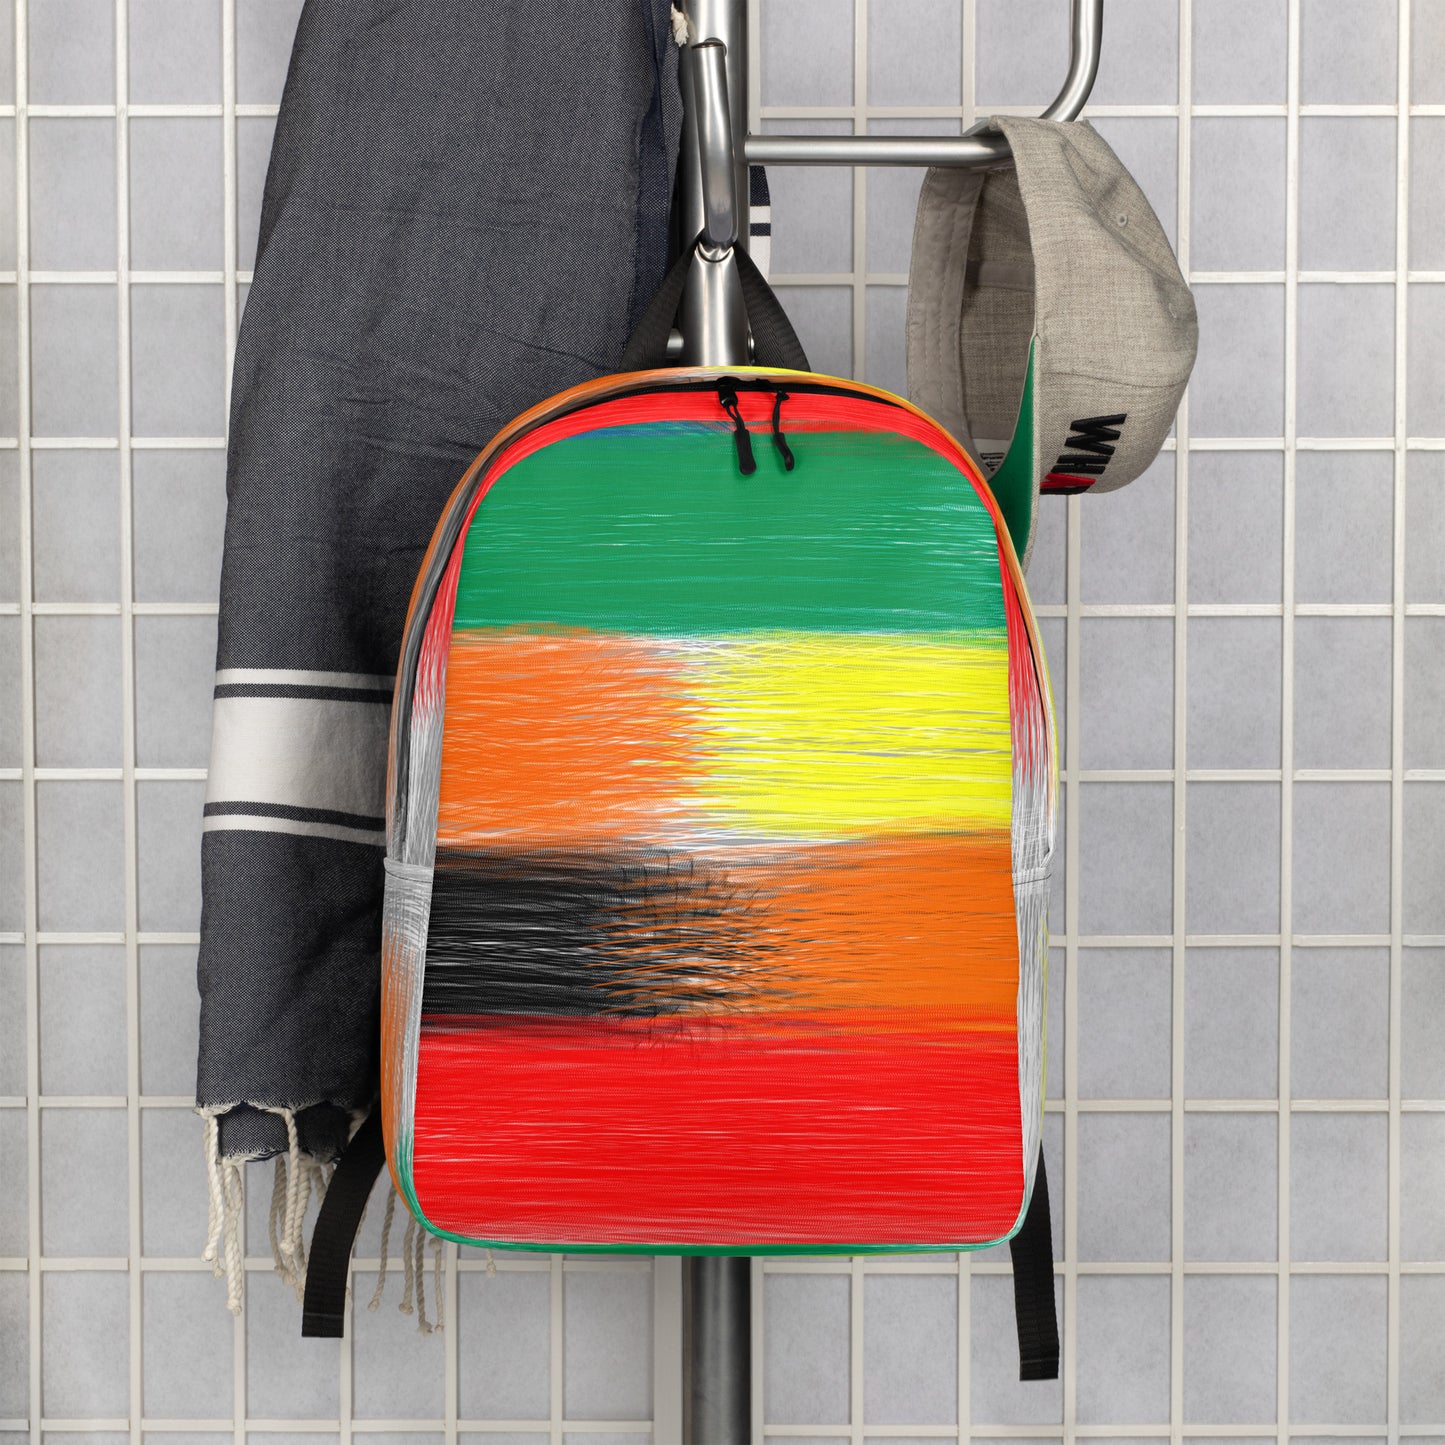 Minimal backpack